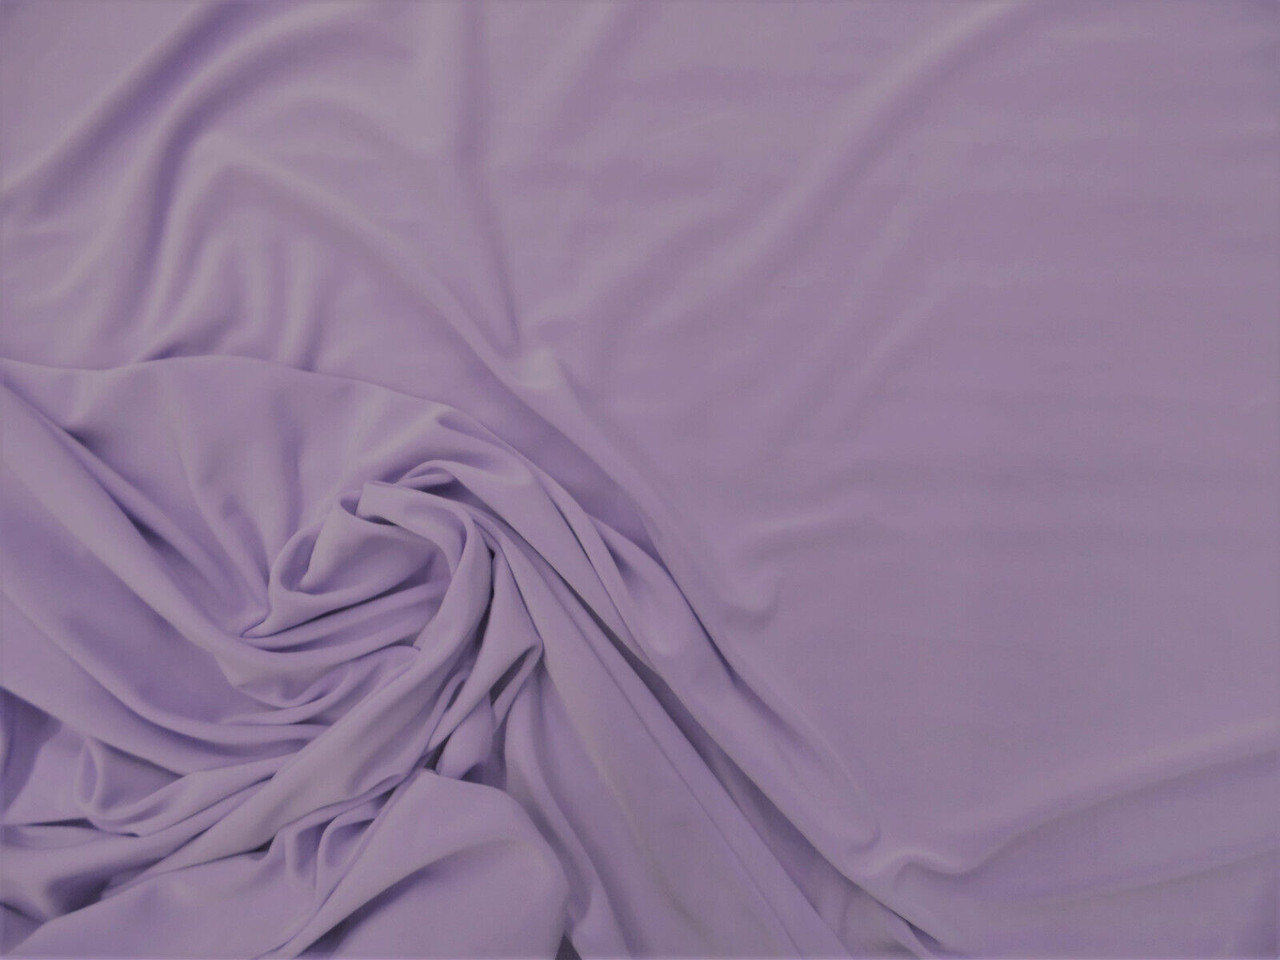 Swimwear Fabric Light Violet Spandex Fabric Material Nylon Spandex Lavender  Stretch Fabric 140cm 55 Wide -  Canada